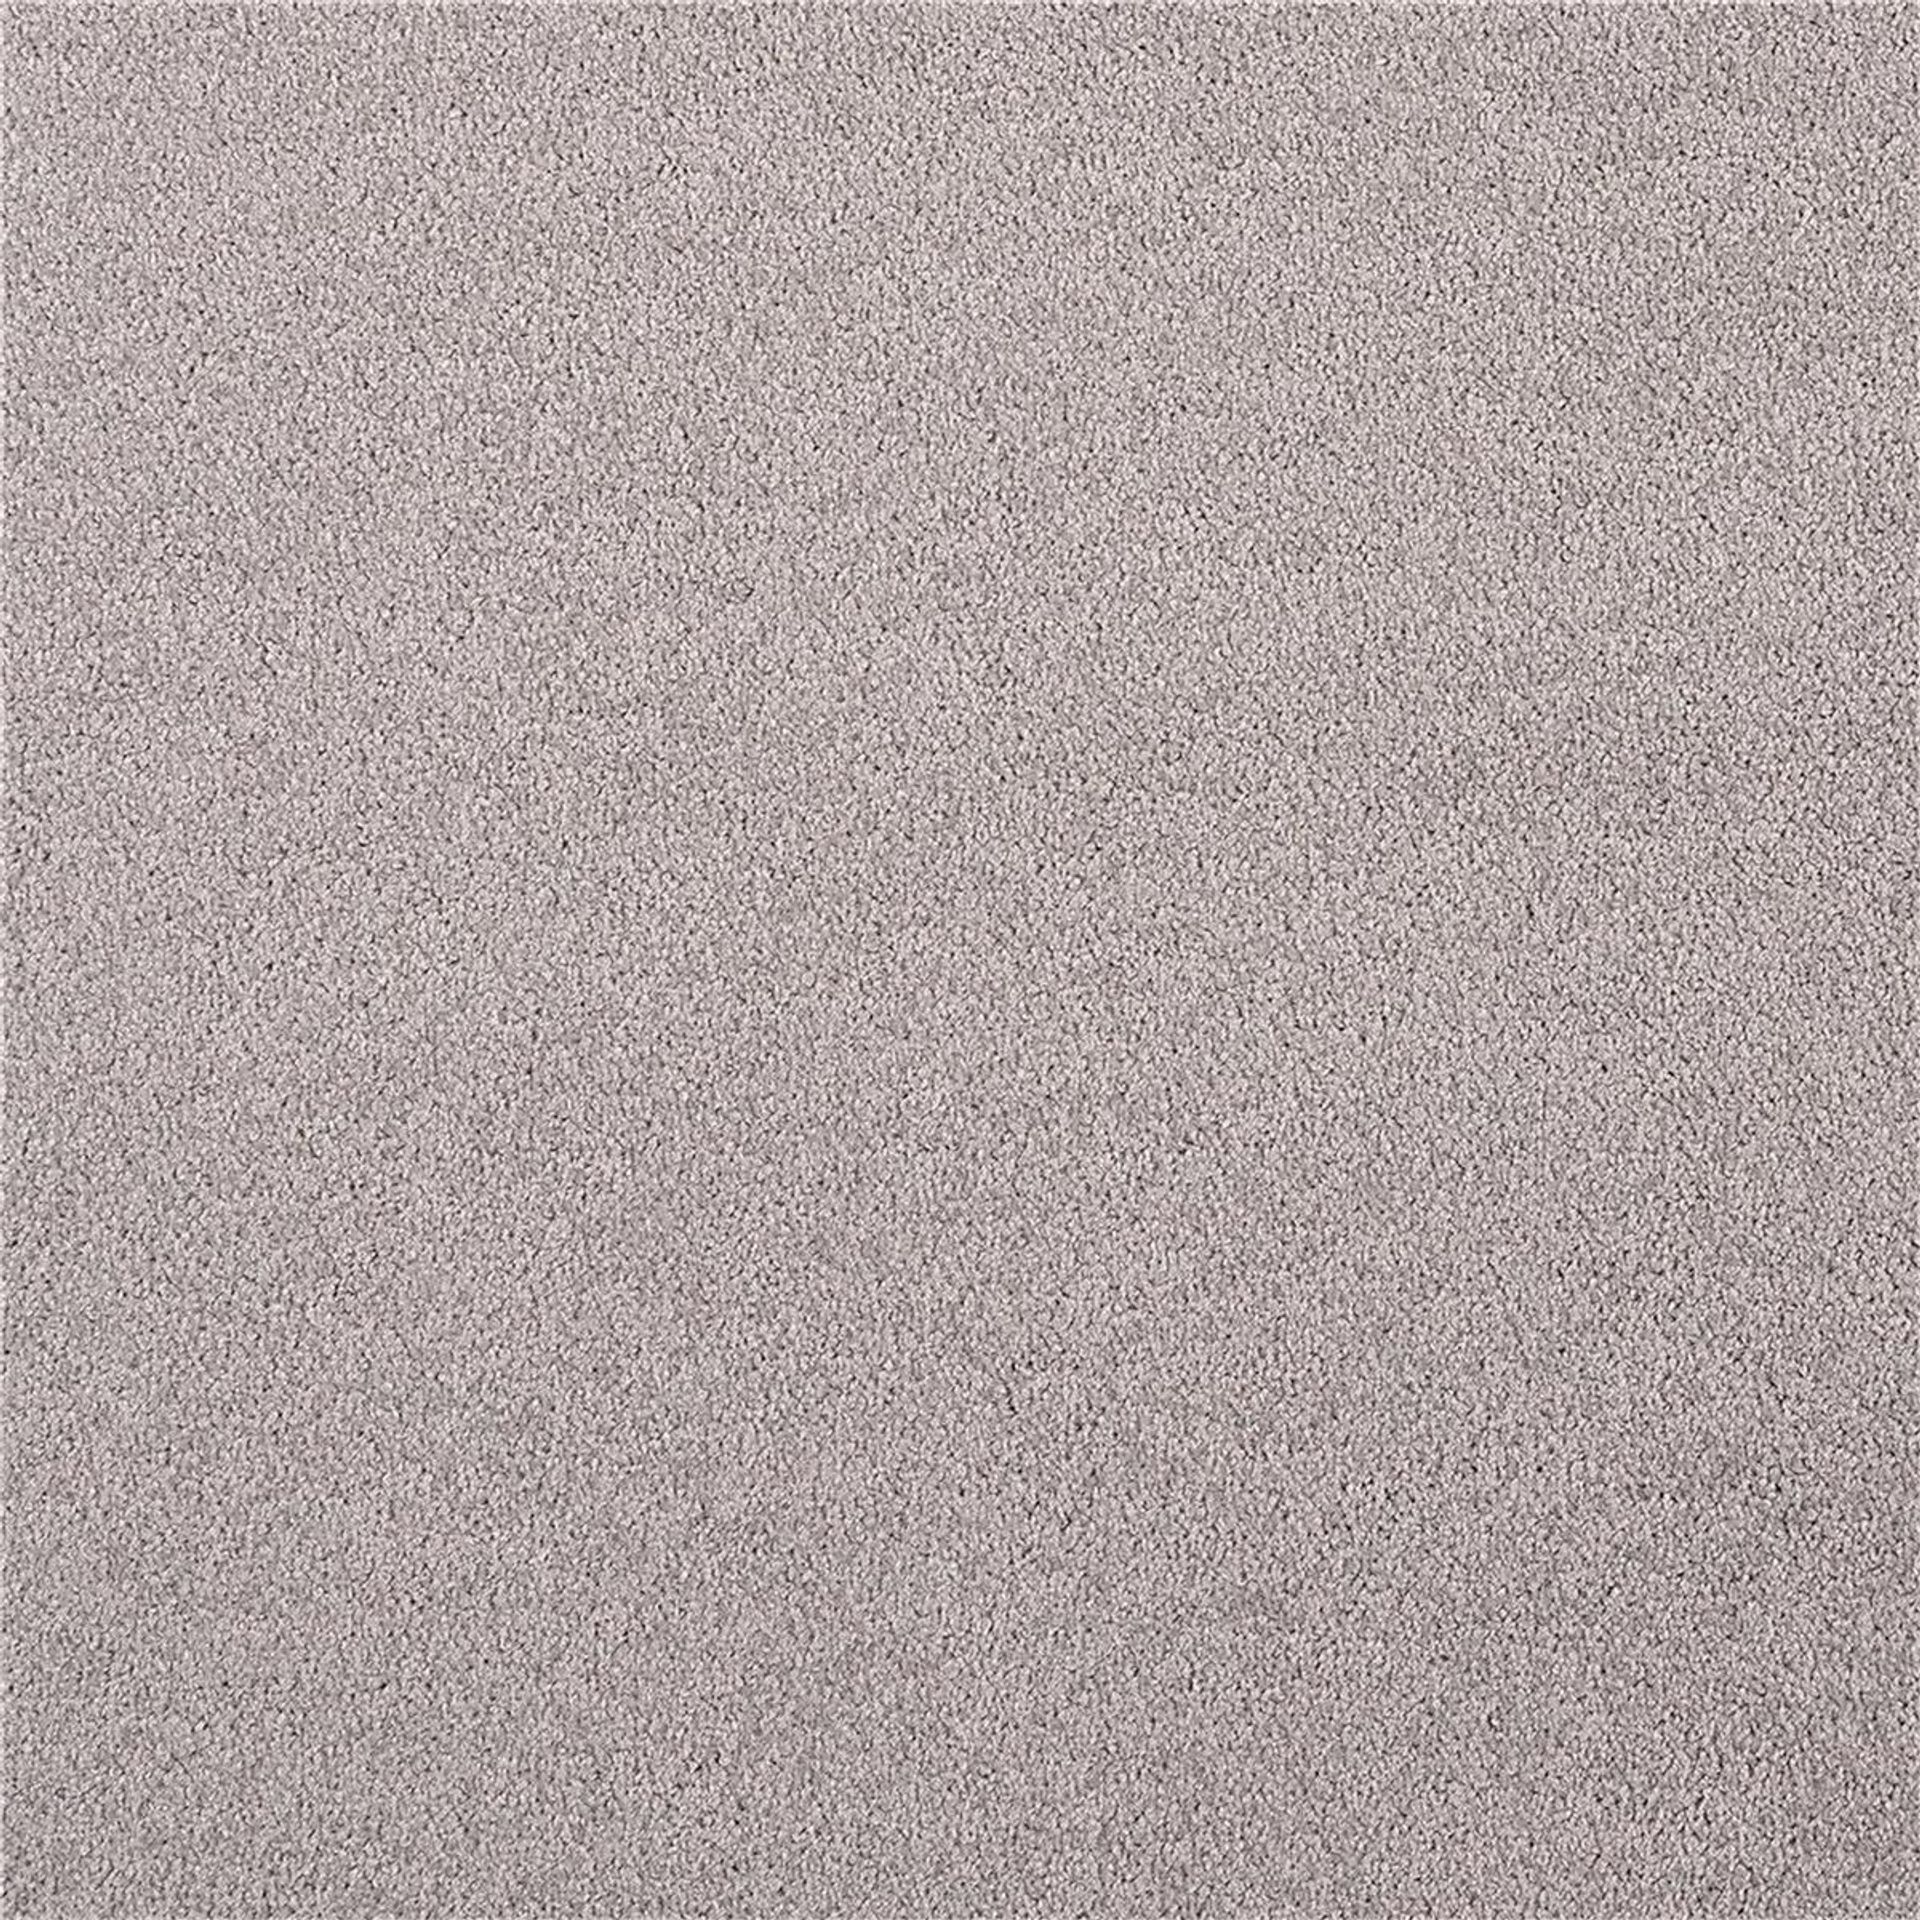 Teppichboden Infloor-Girloon Cashmere-Flair Frisé Grau 520 uni - Rollenbreite 400 cm